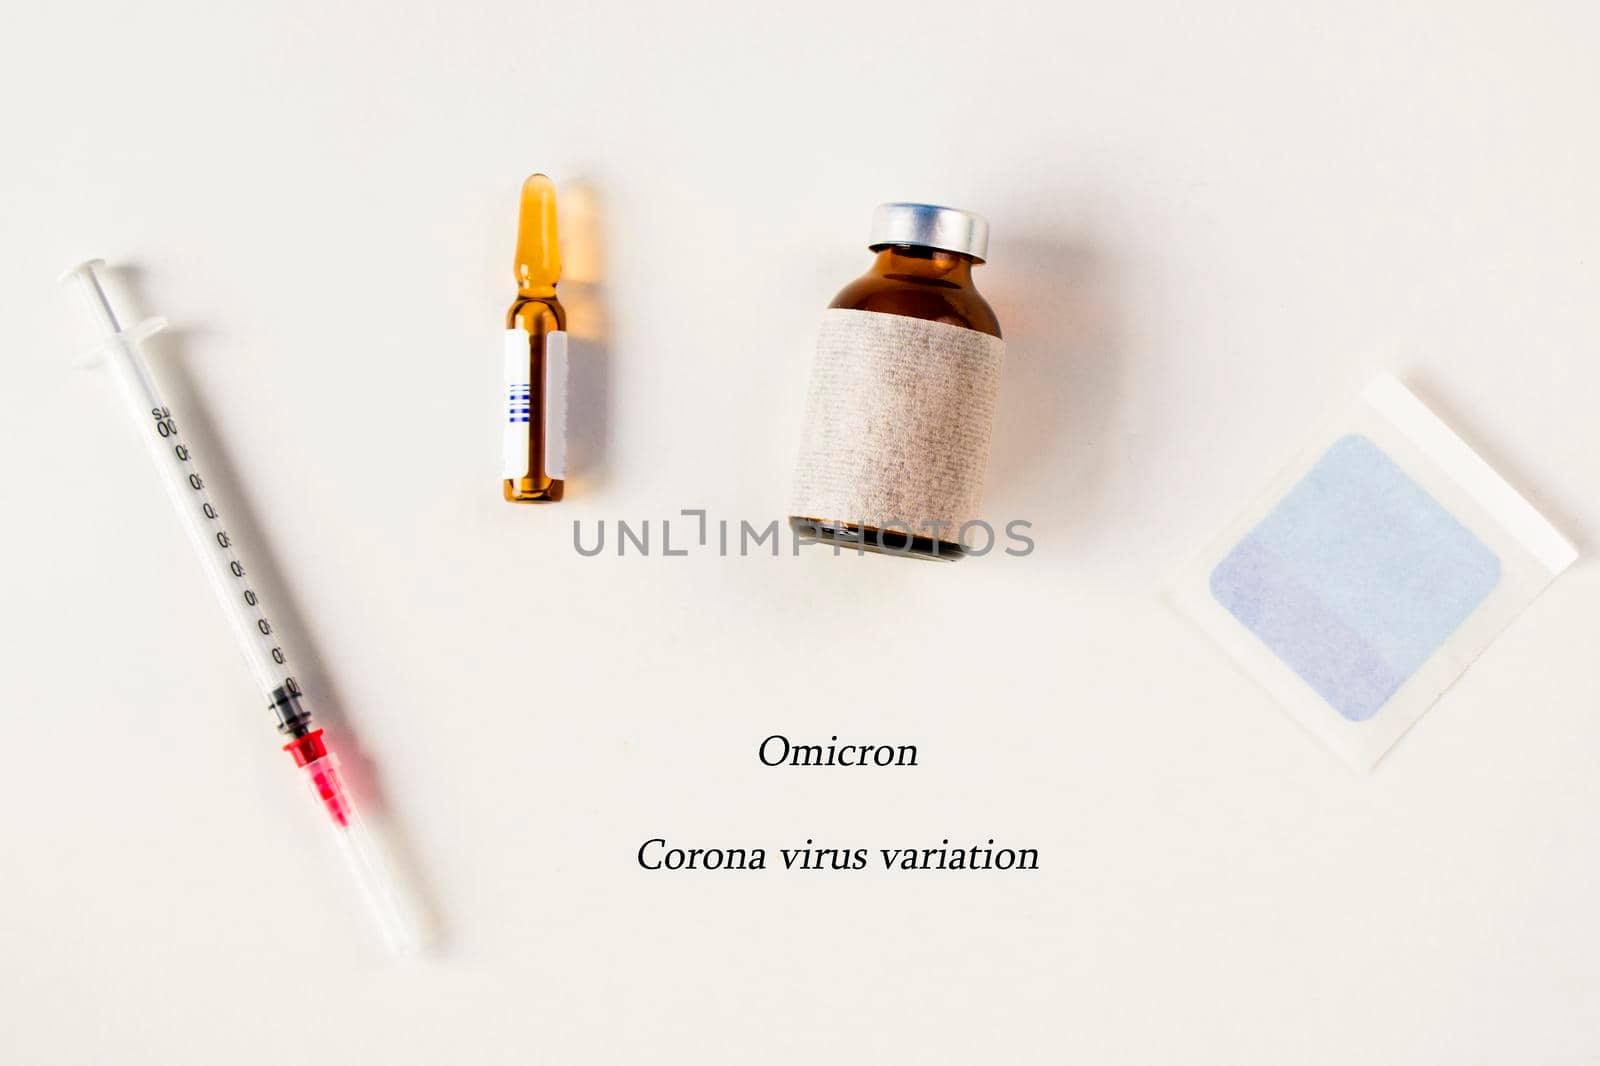 Omicron, corona virus variation. Vaccine ampule and needle on the white background, virus vaccine